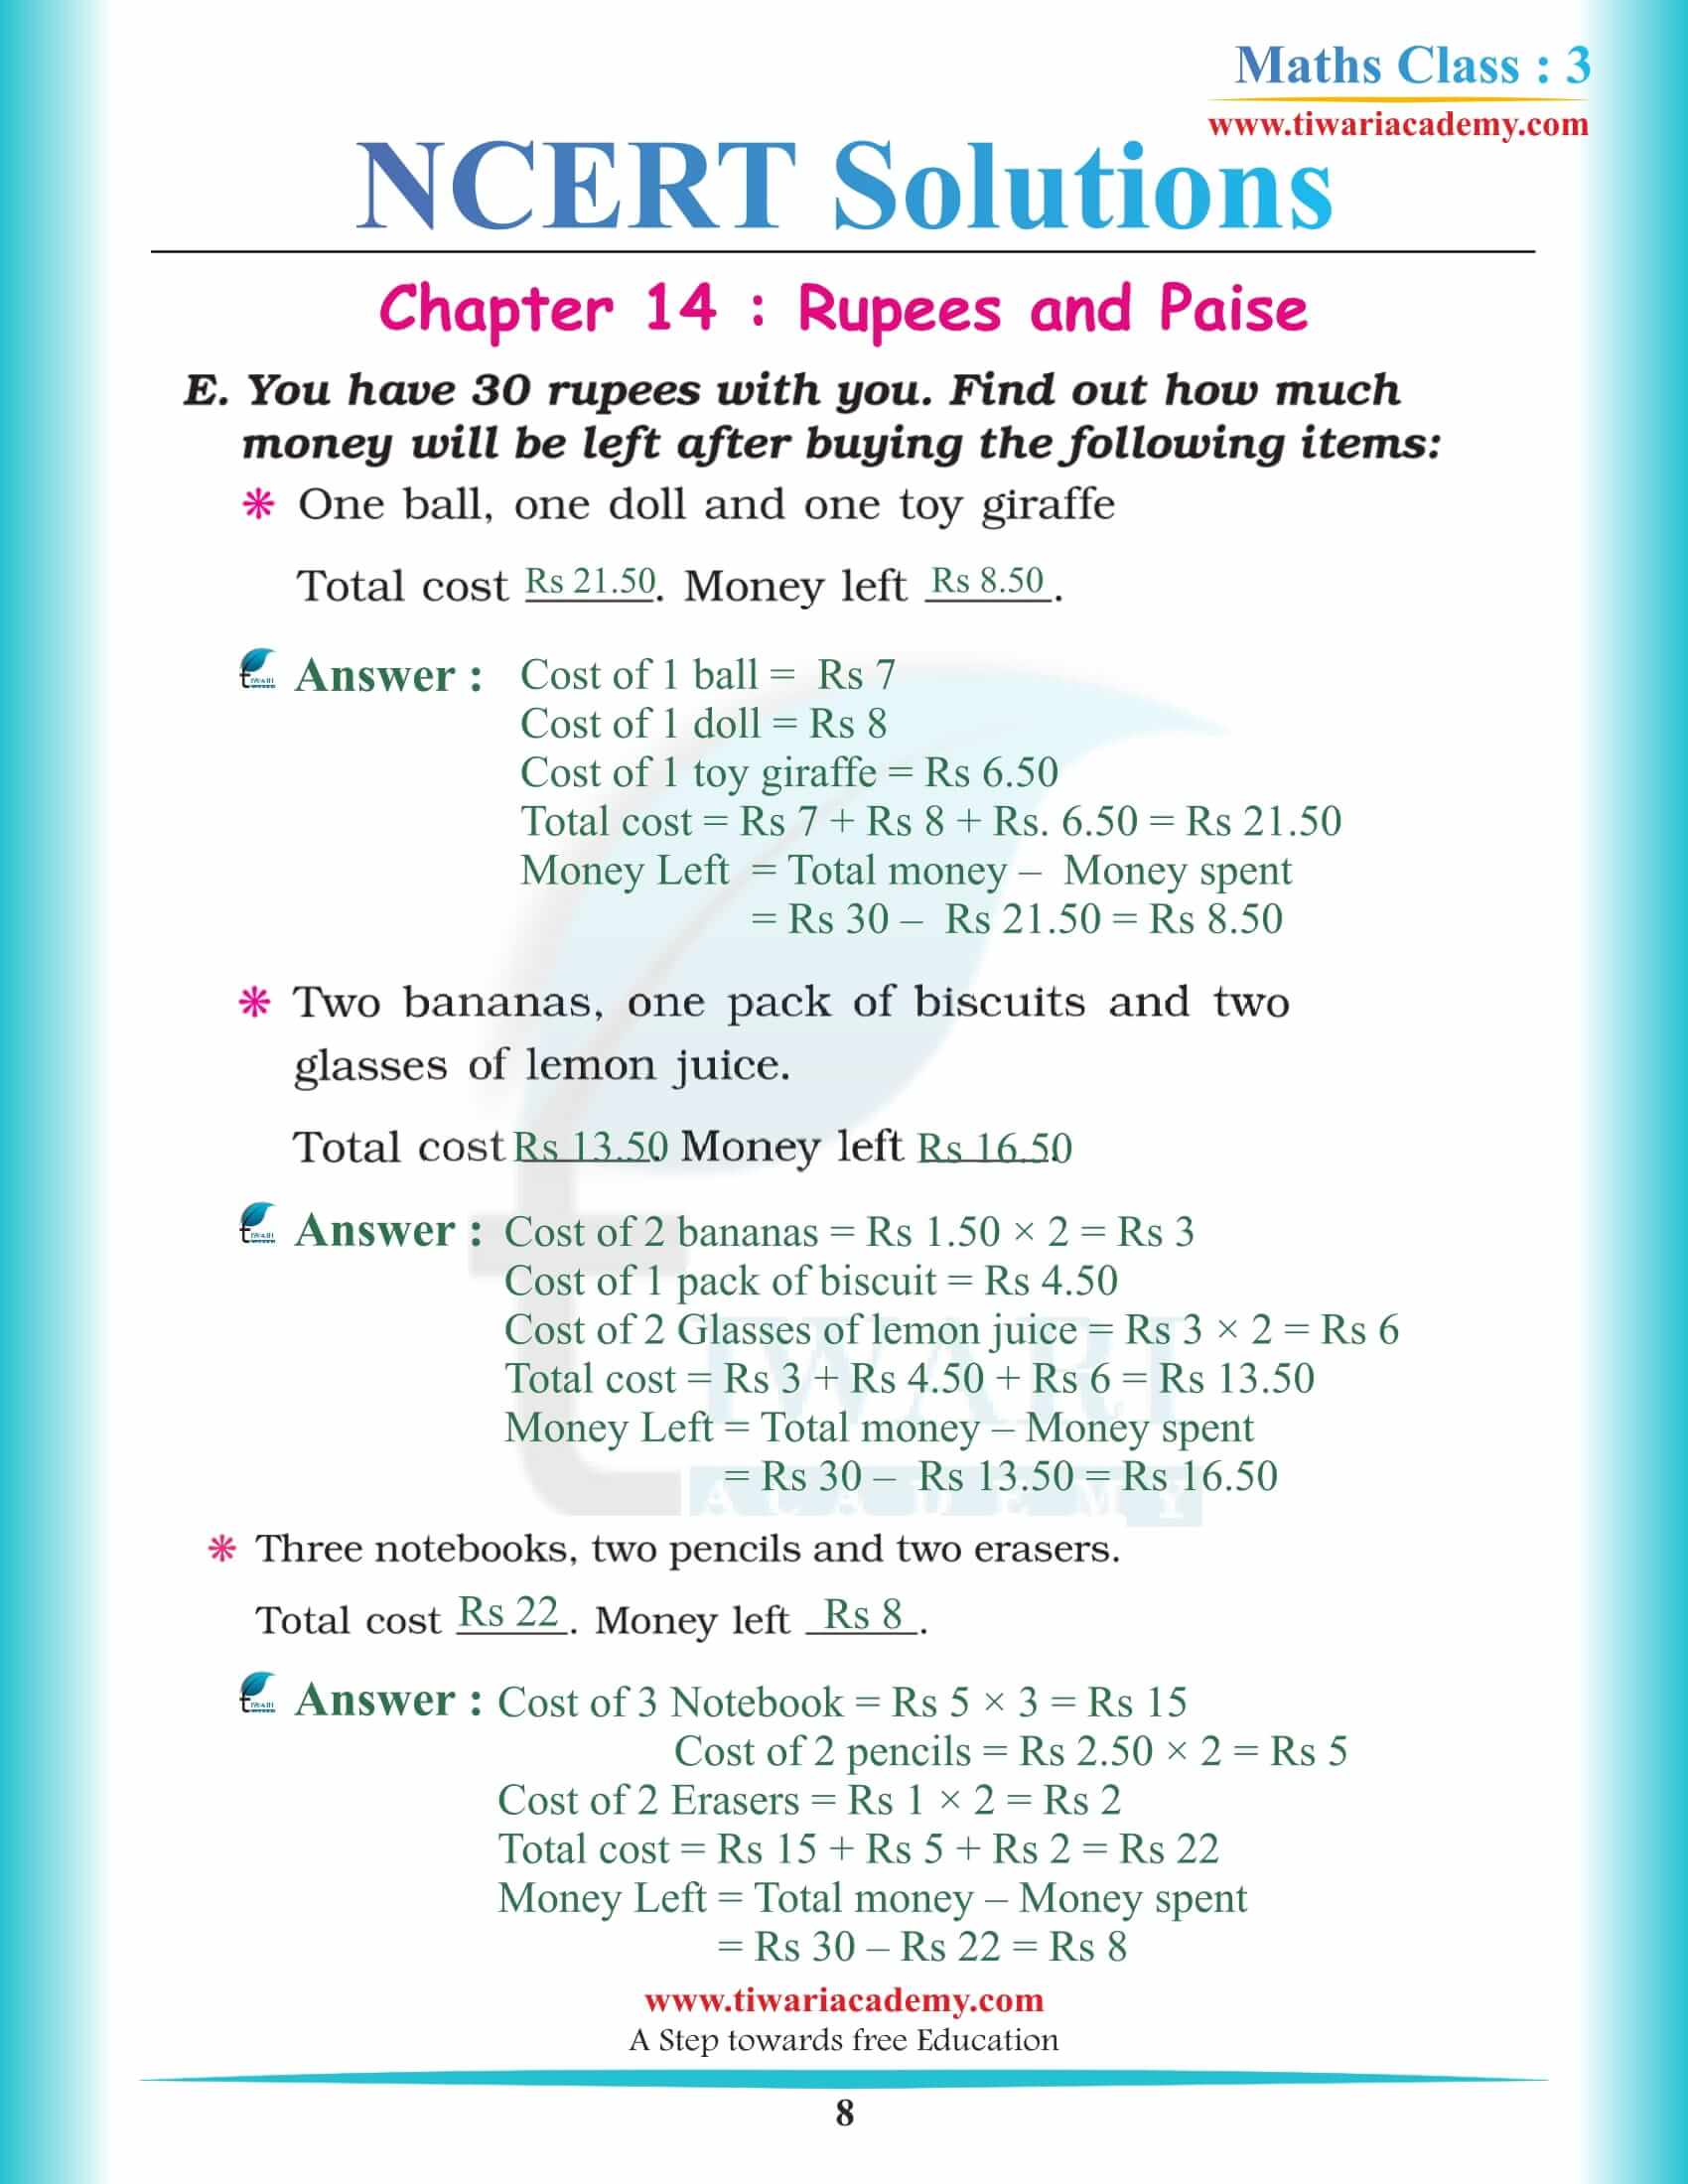 Class 3 Maths Chapter 14 solutions download